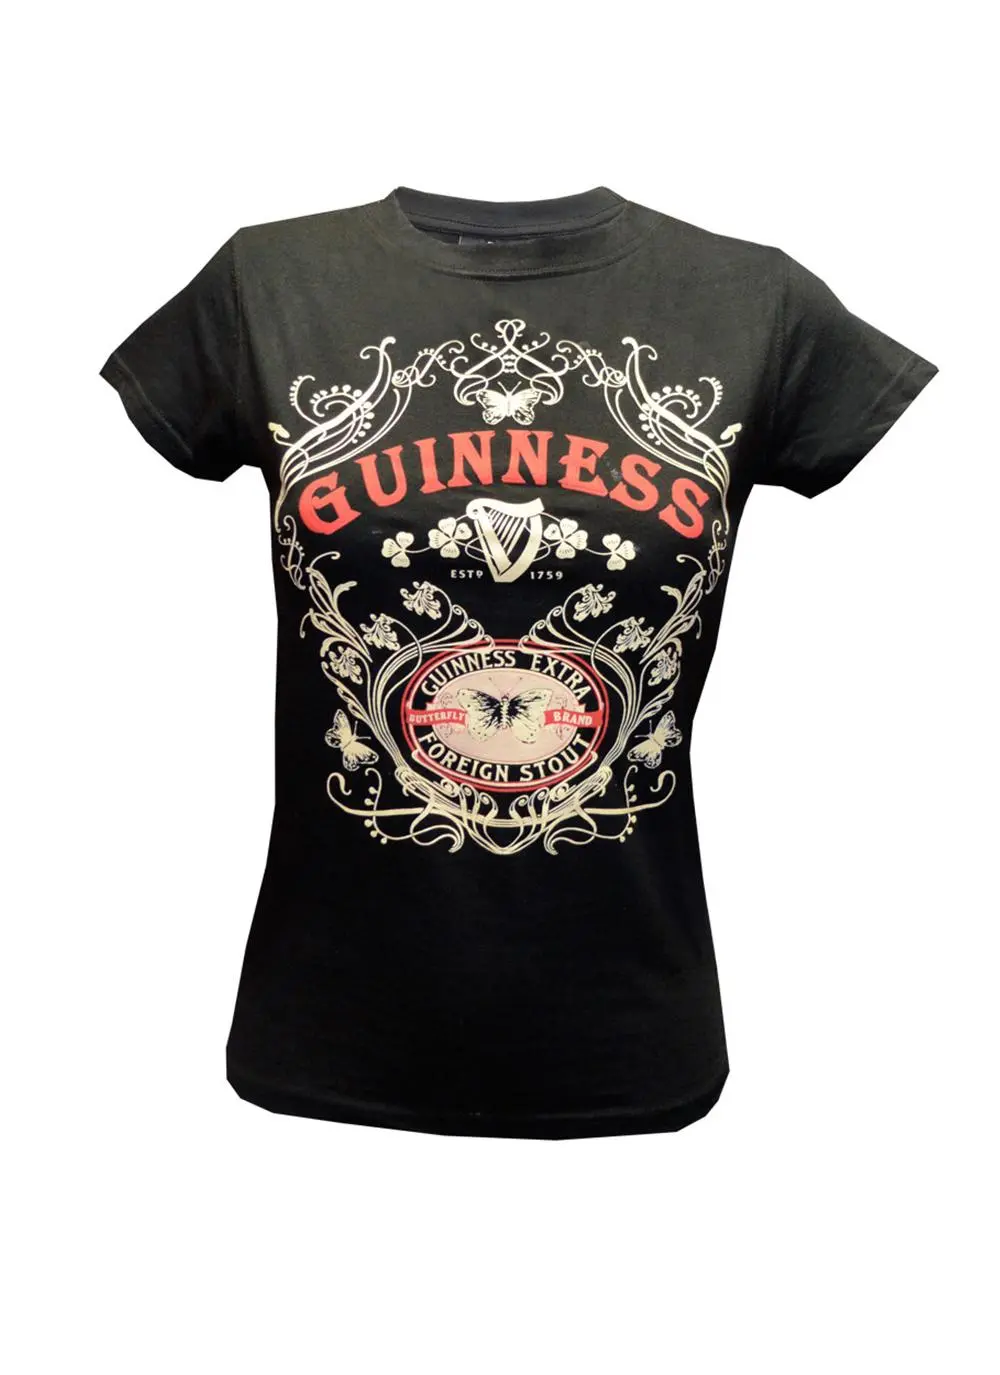 Guinness Black Butterfly Tshirt | Blarney